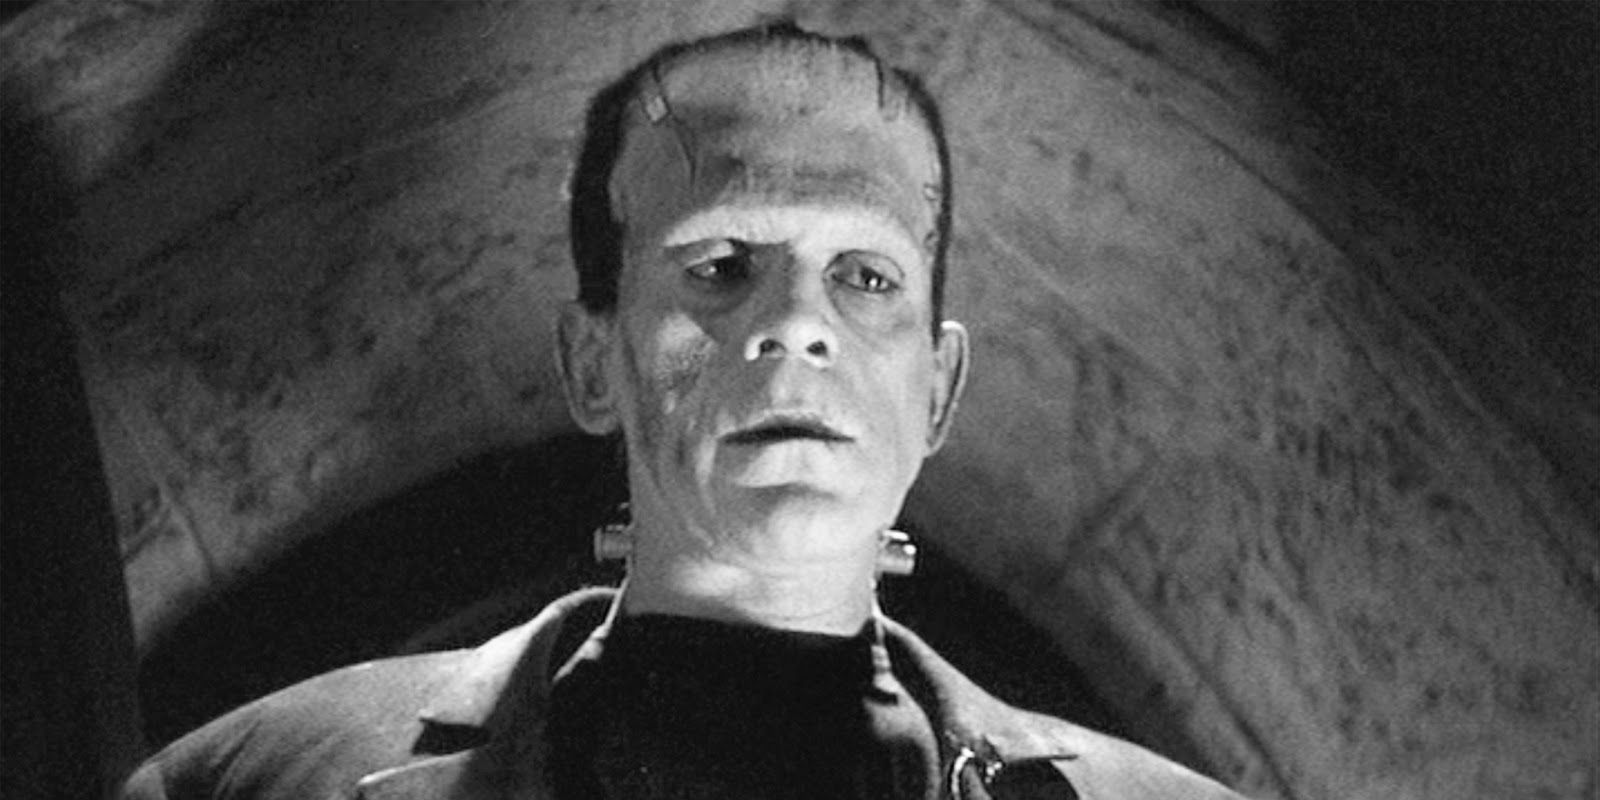 Boris Karloff as Frankensteins monster